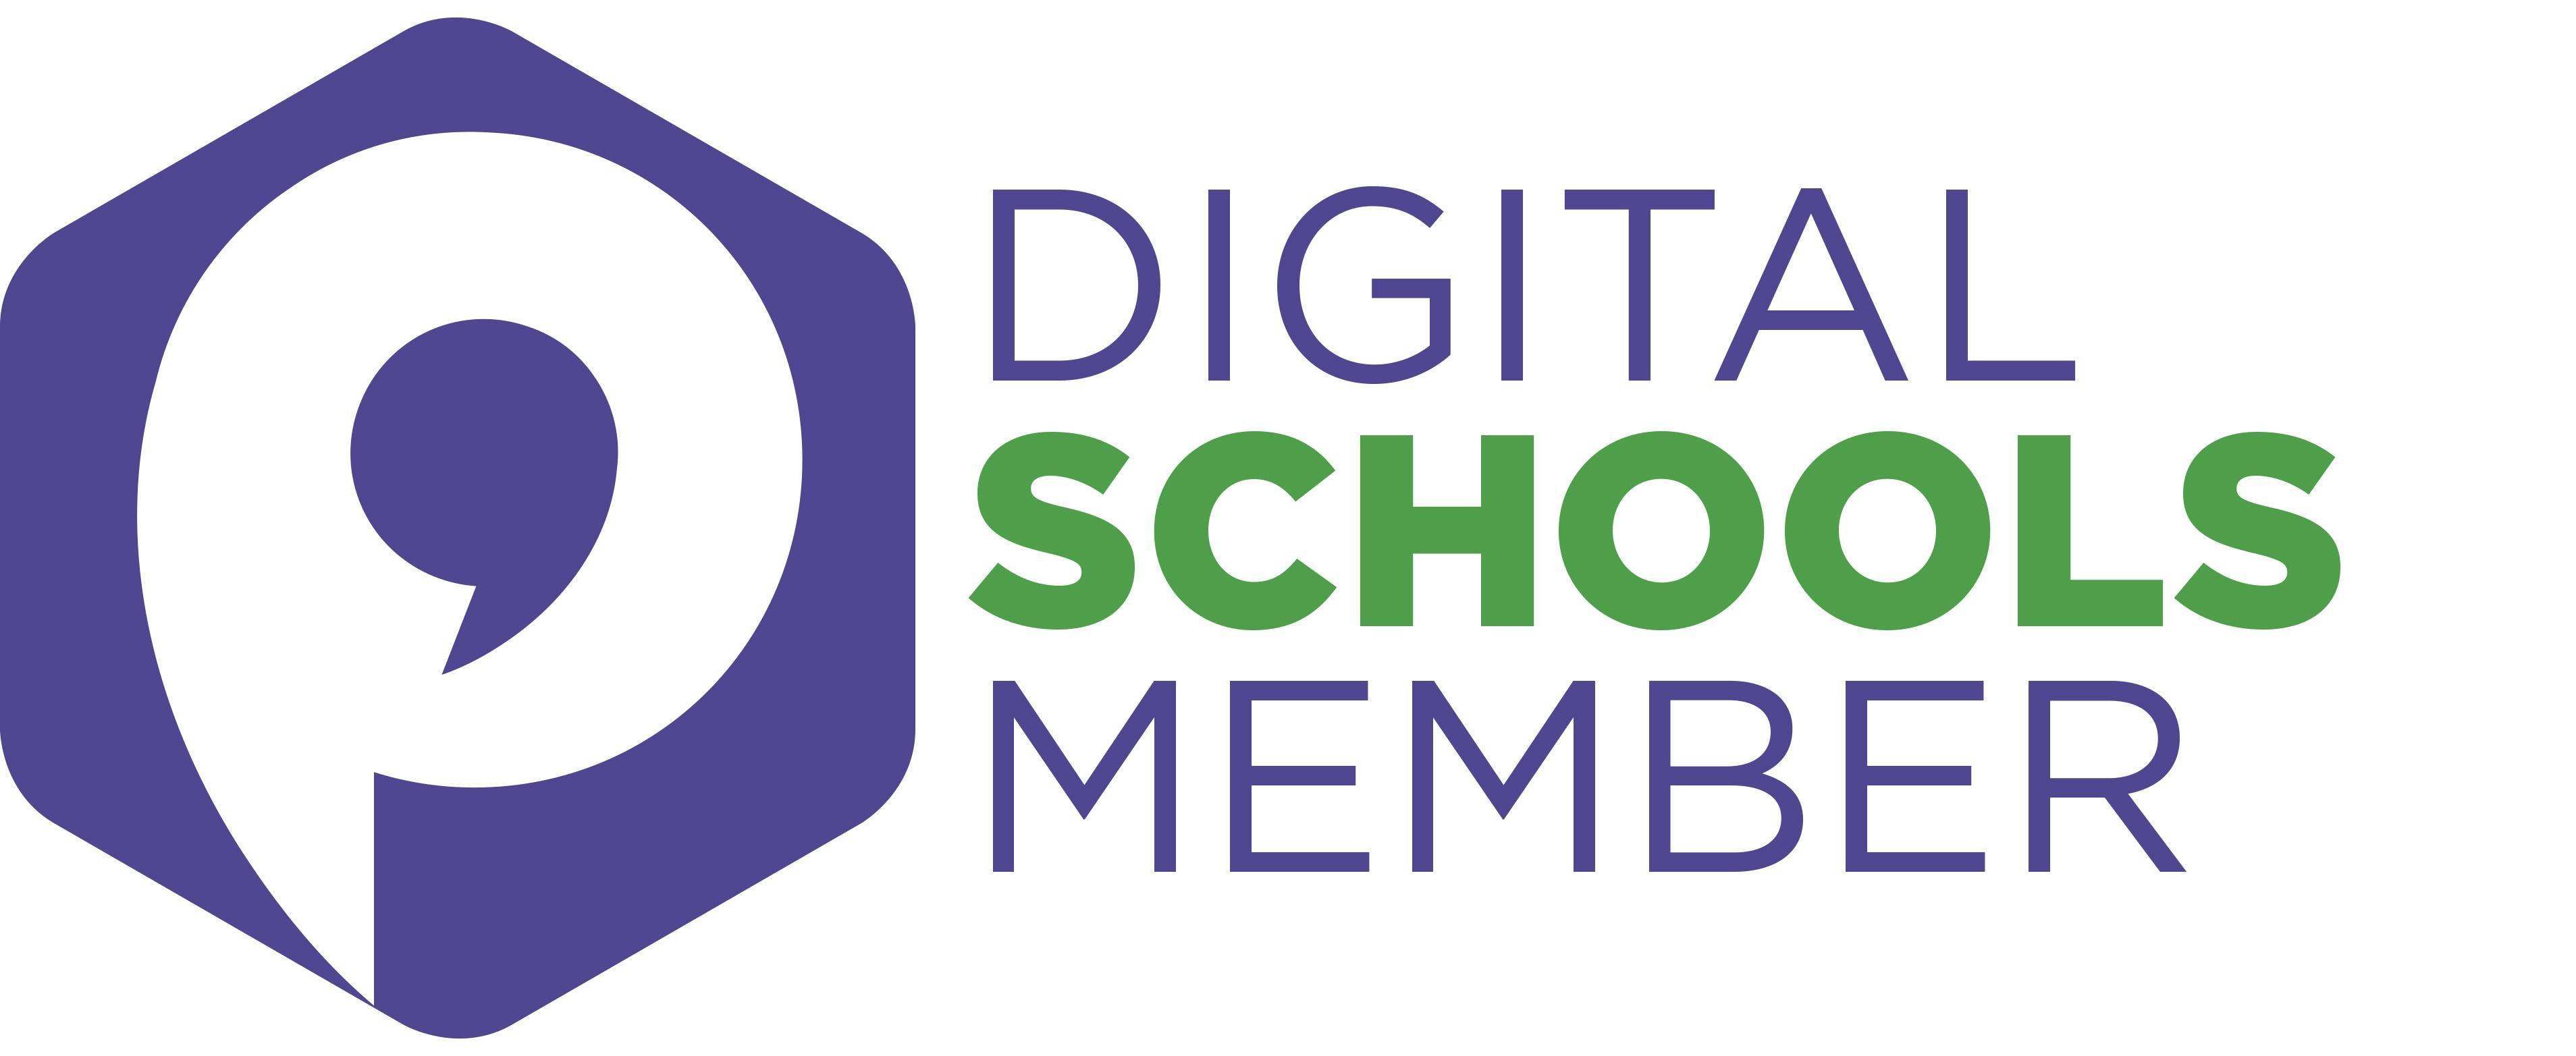 Web Digital Logo - DIGITAL SCHOOL logo WEB (JPEG).jpg | Parent Zone